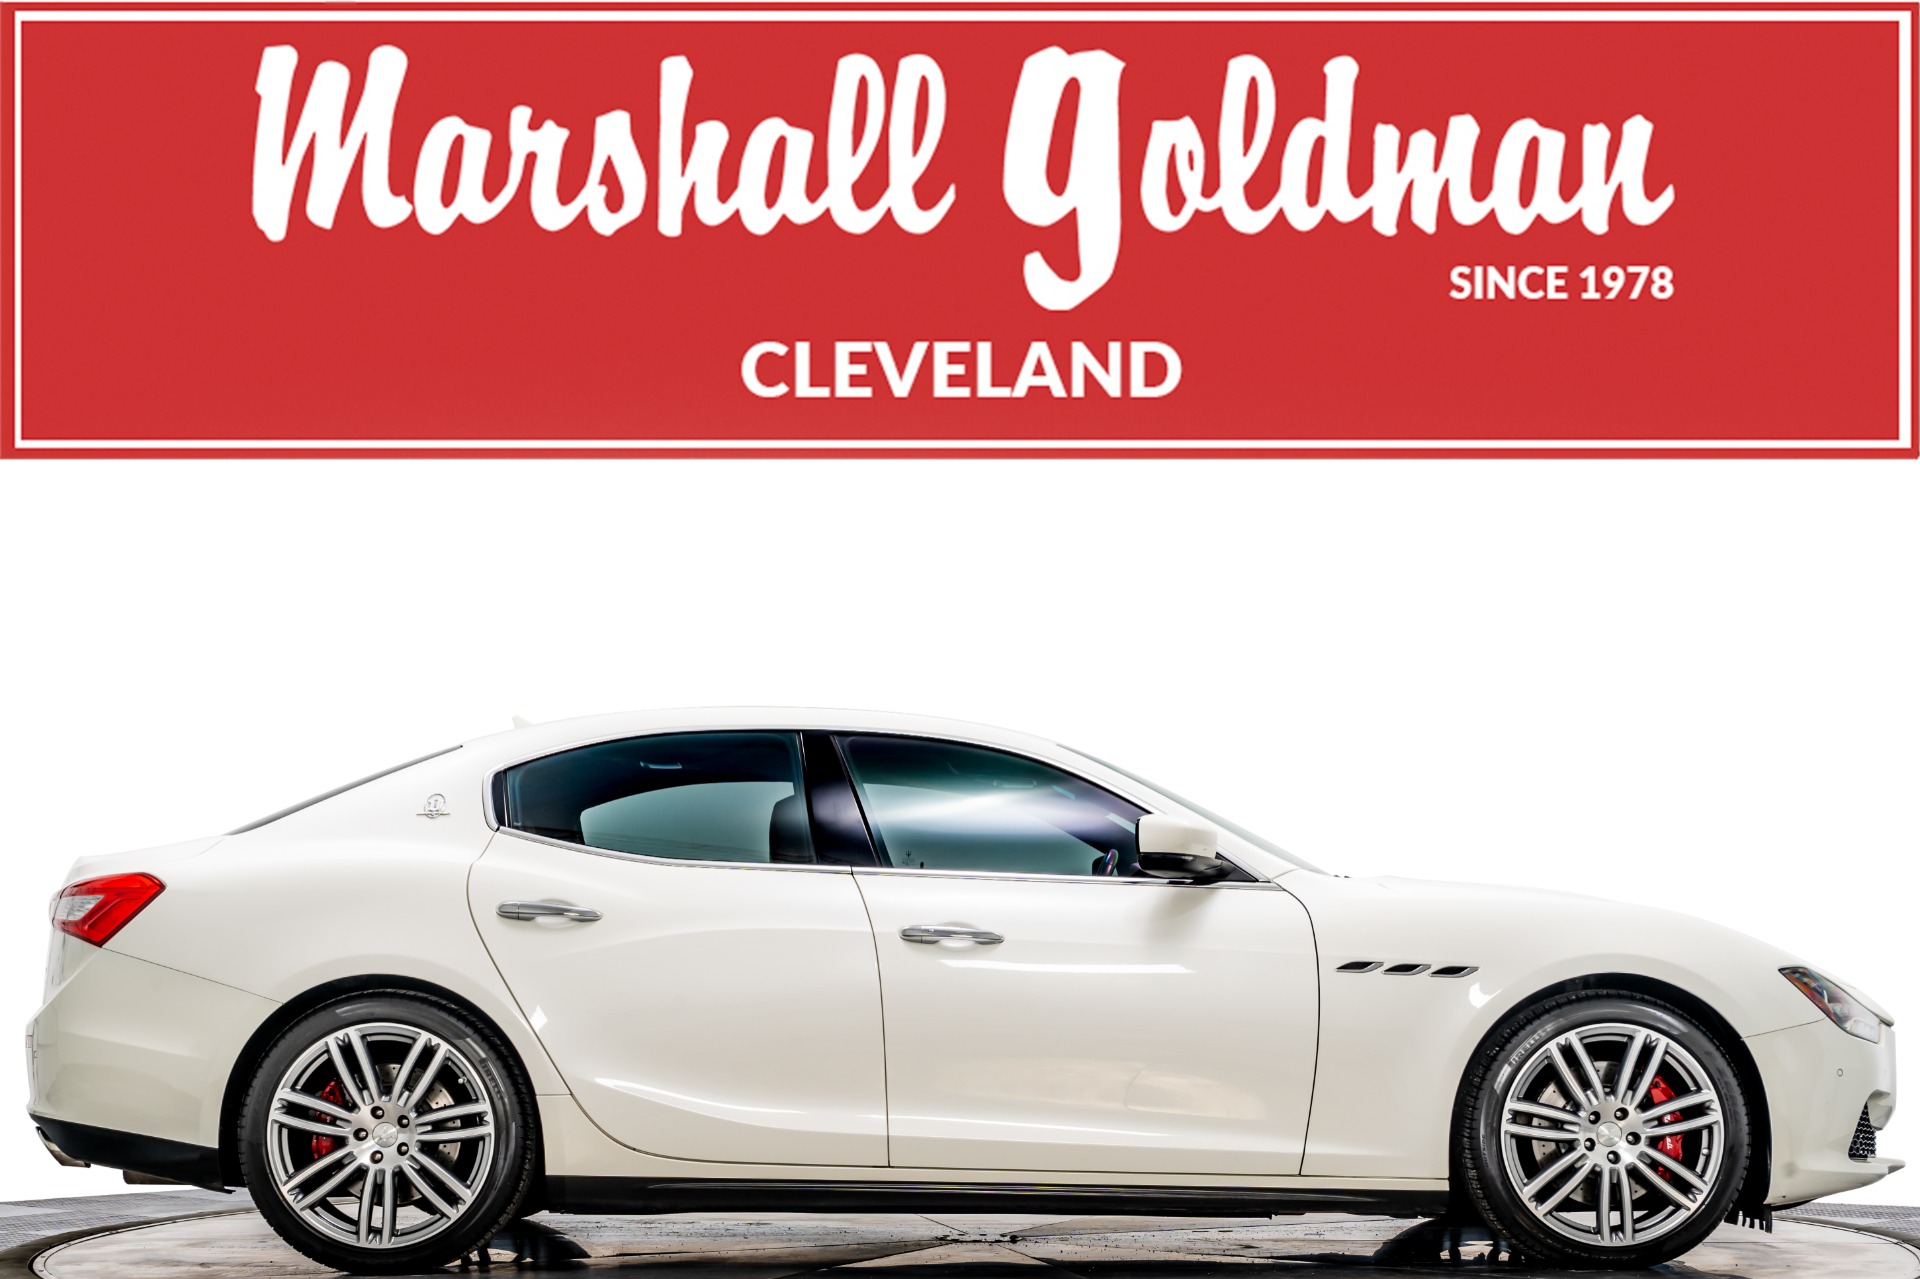 Used 2014 Maserati Ghibli S Q4 For Sale (Sold) | Marshall Goldman 